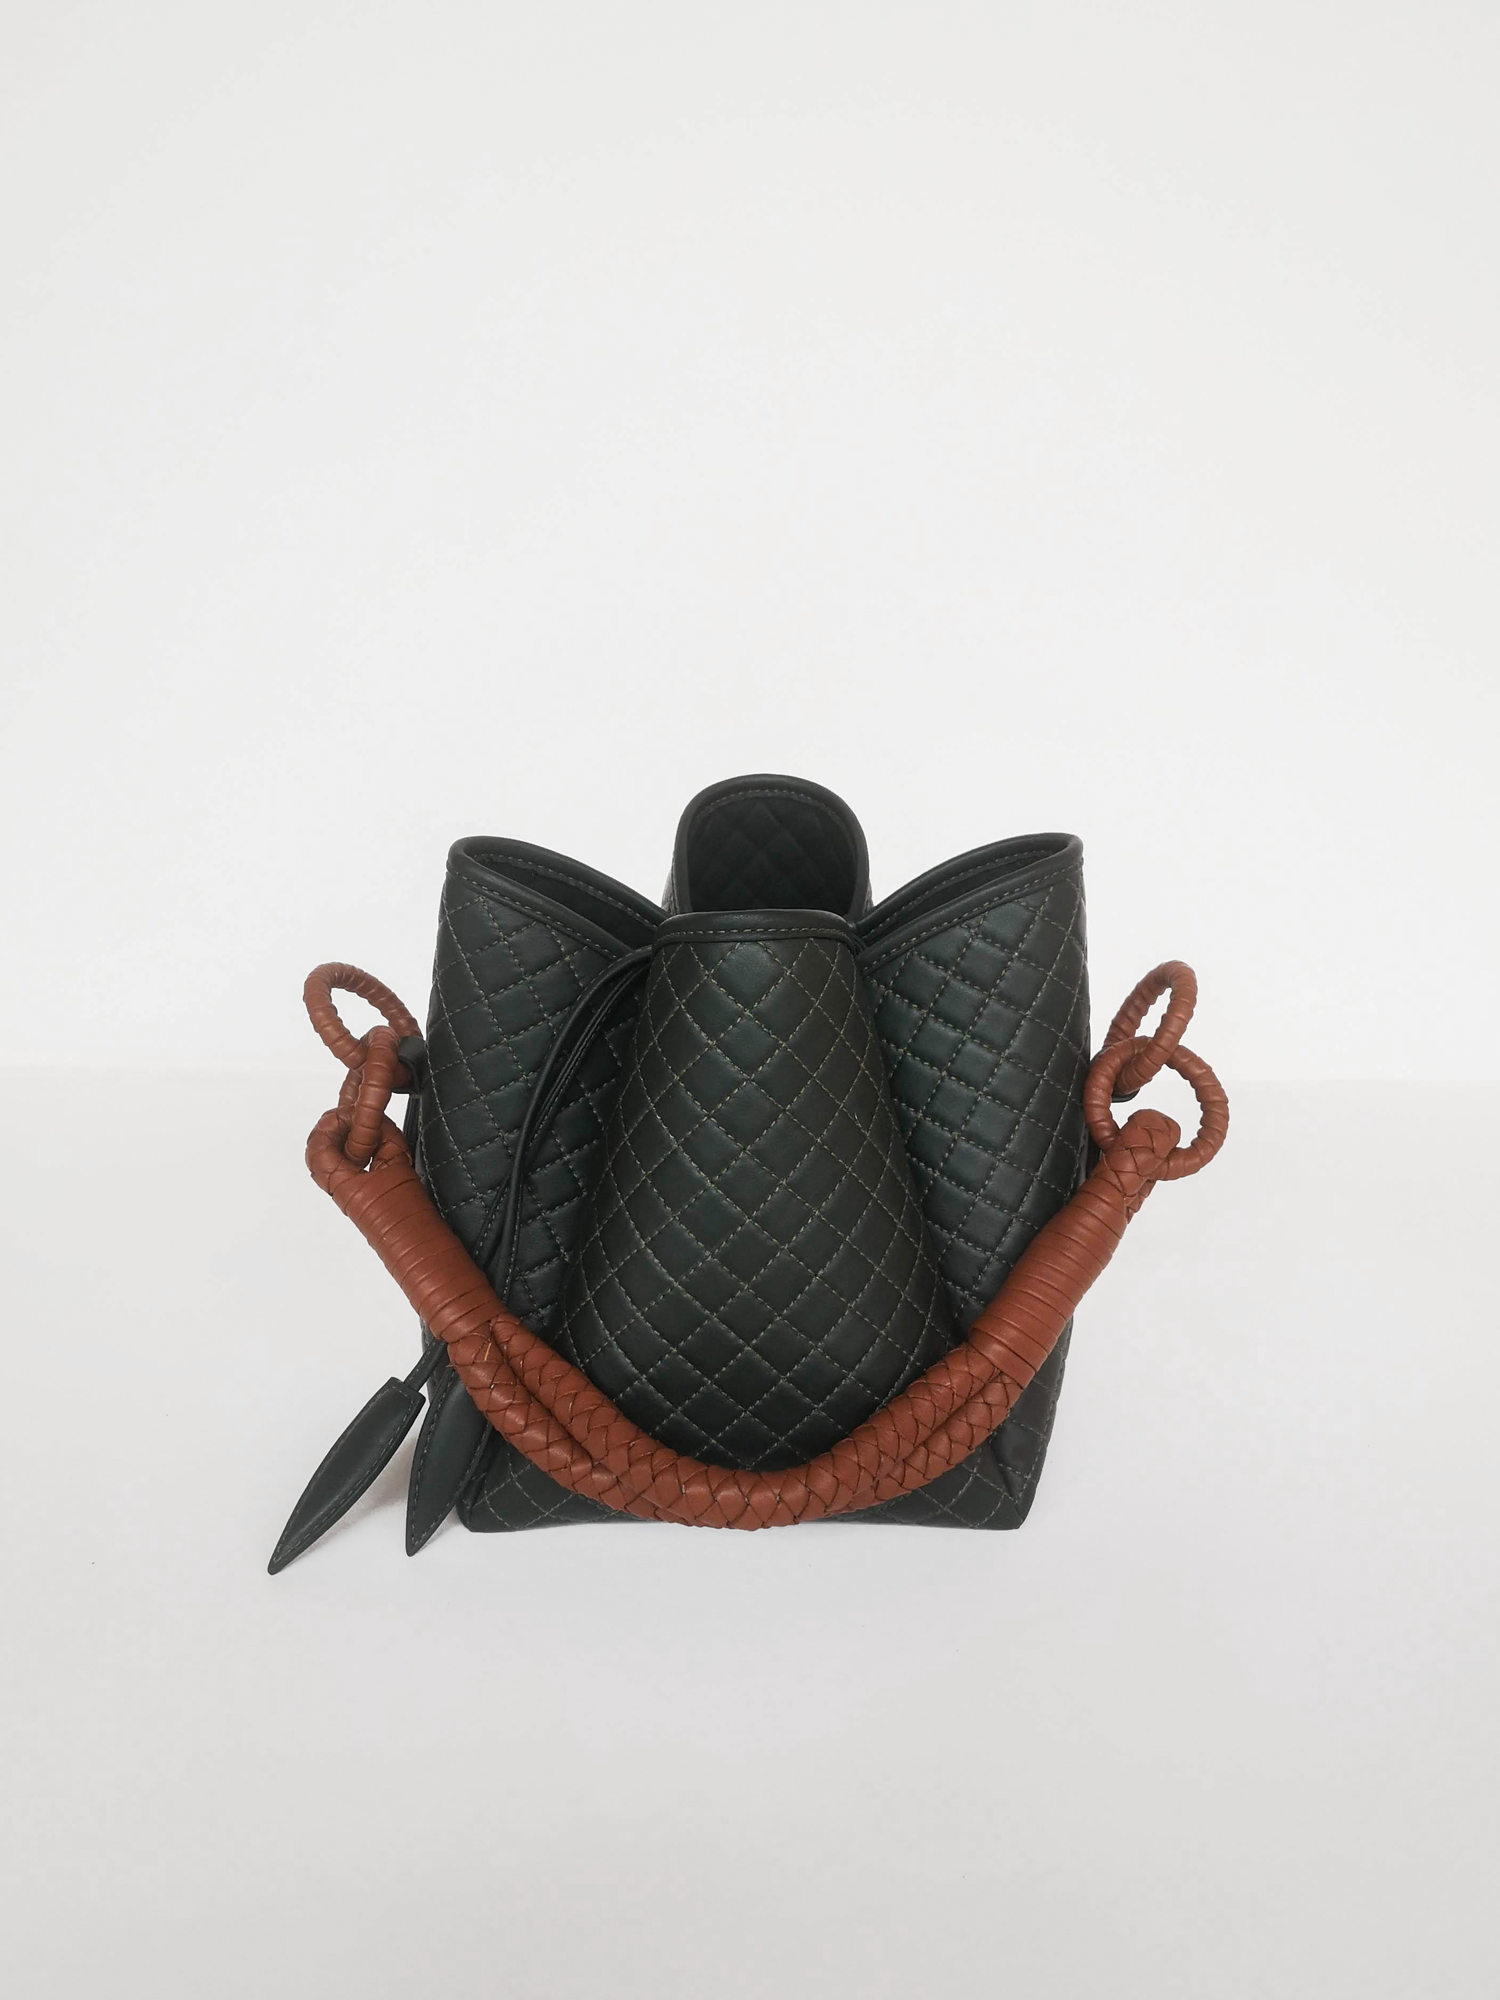 Ketti Handbags Tulip Designer Camera Bag 1245 B&H Photo Video